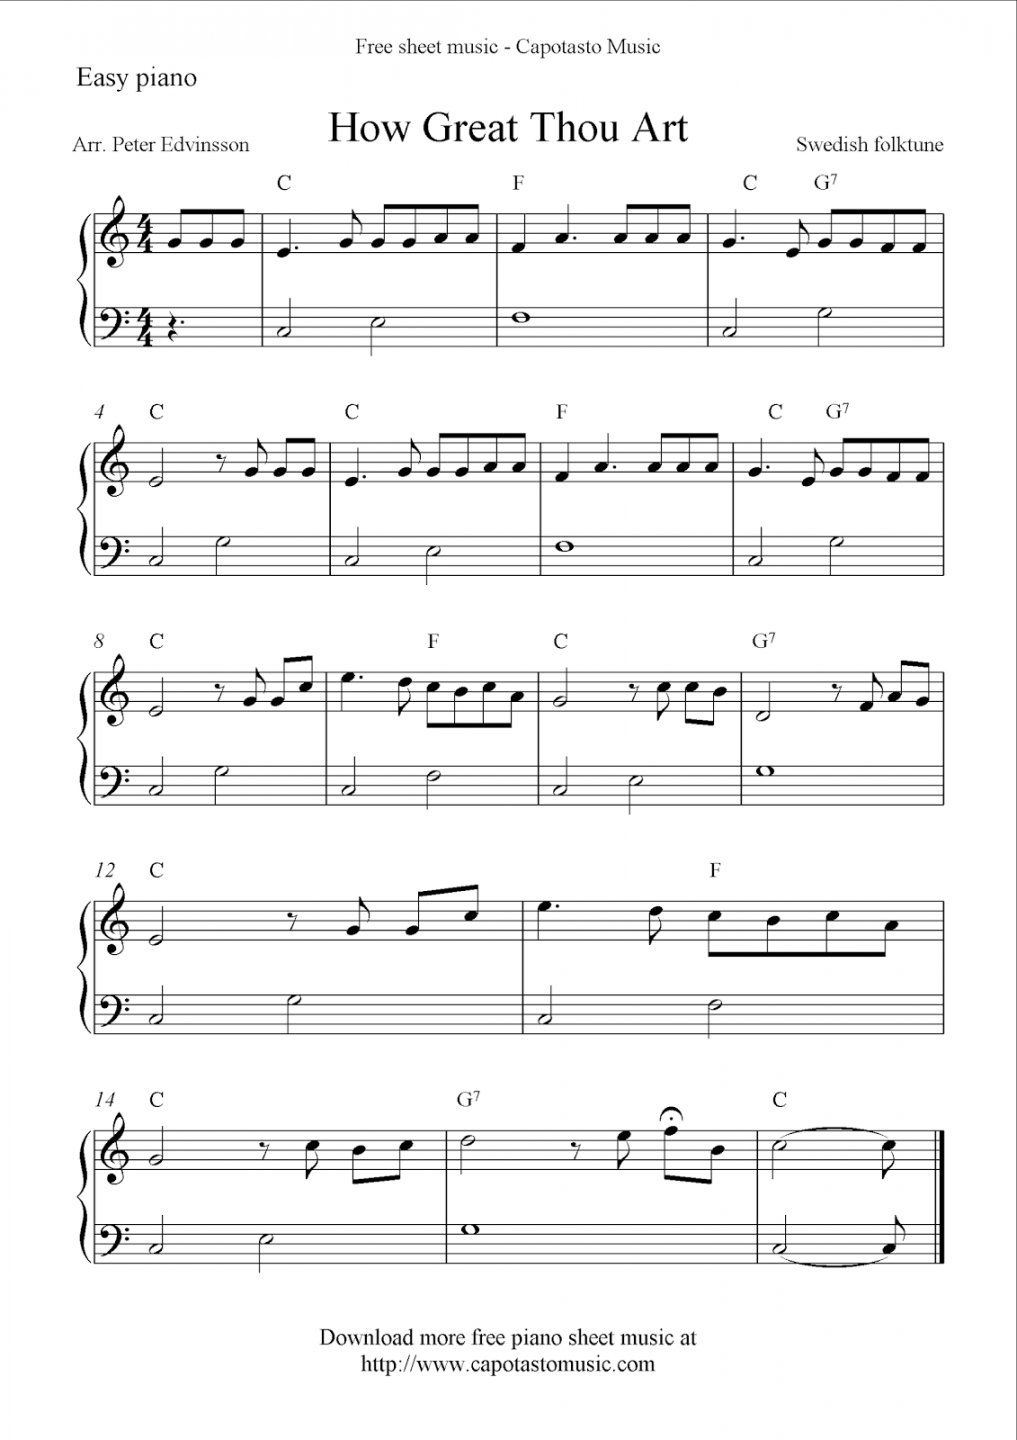 Free Sheet Music Scores: Free easy piano sheet music, How Great